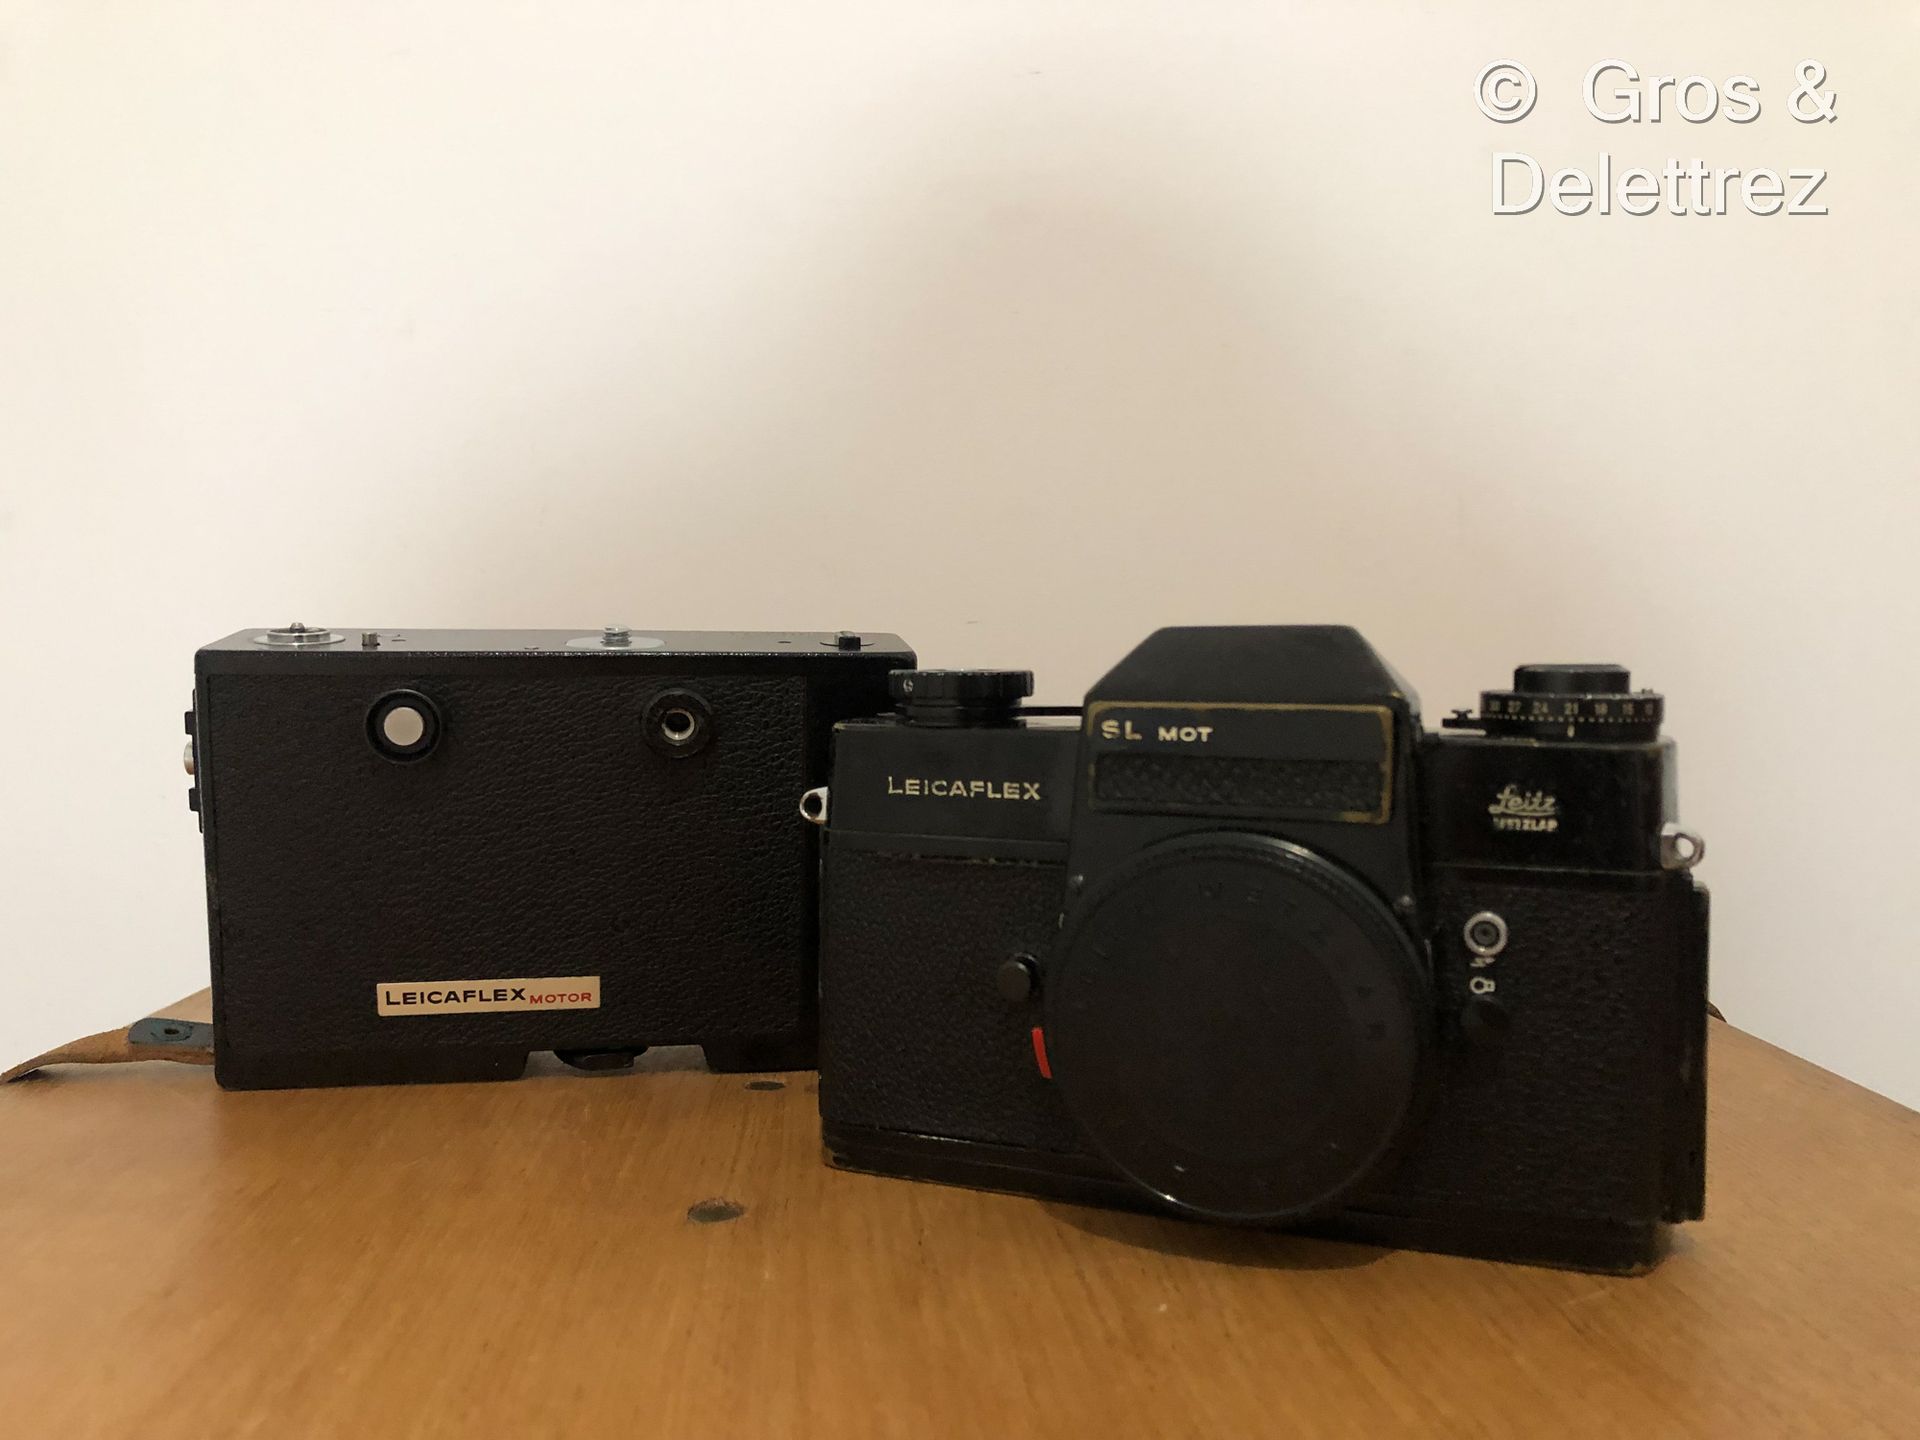 Null (E) Leitz Leicaflex SL Mot (black, 1970) #1260386 without lens with Leicafl&hellip;